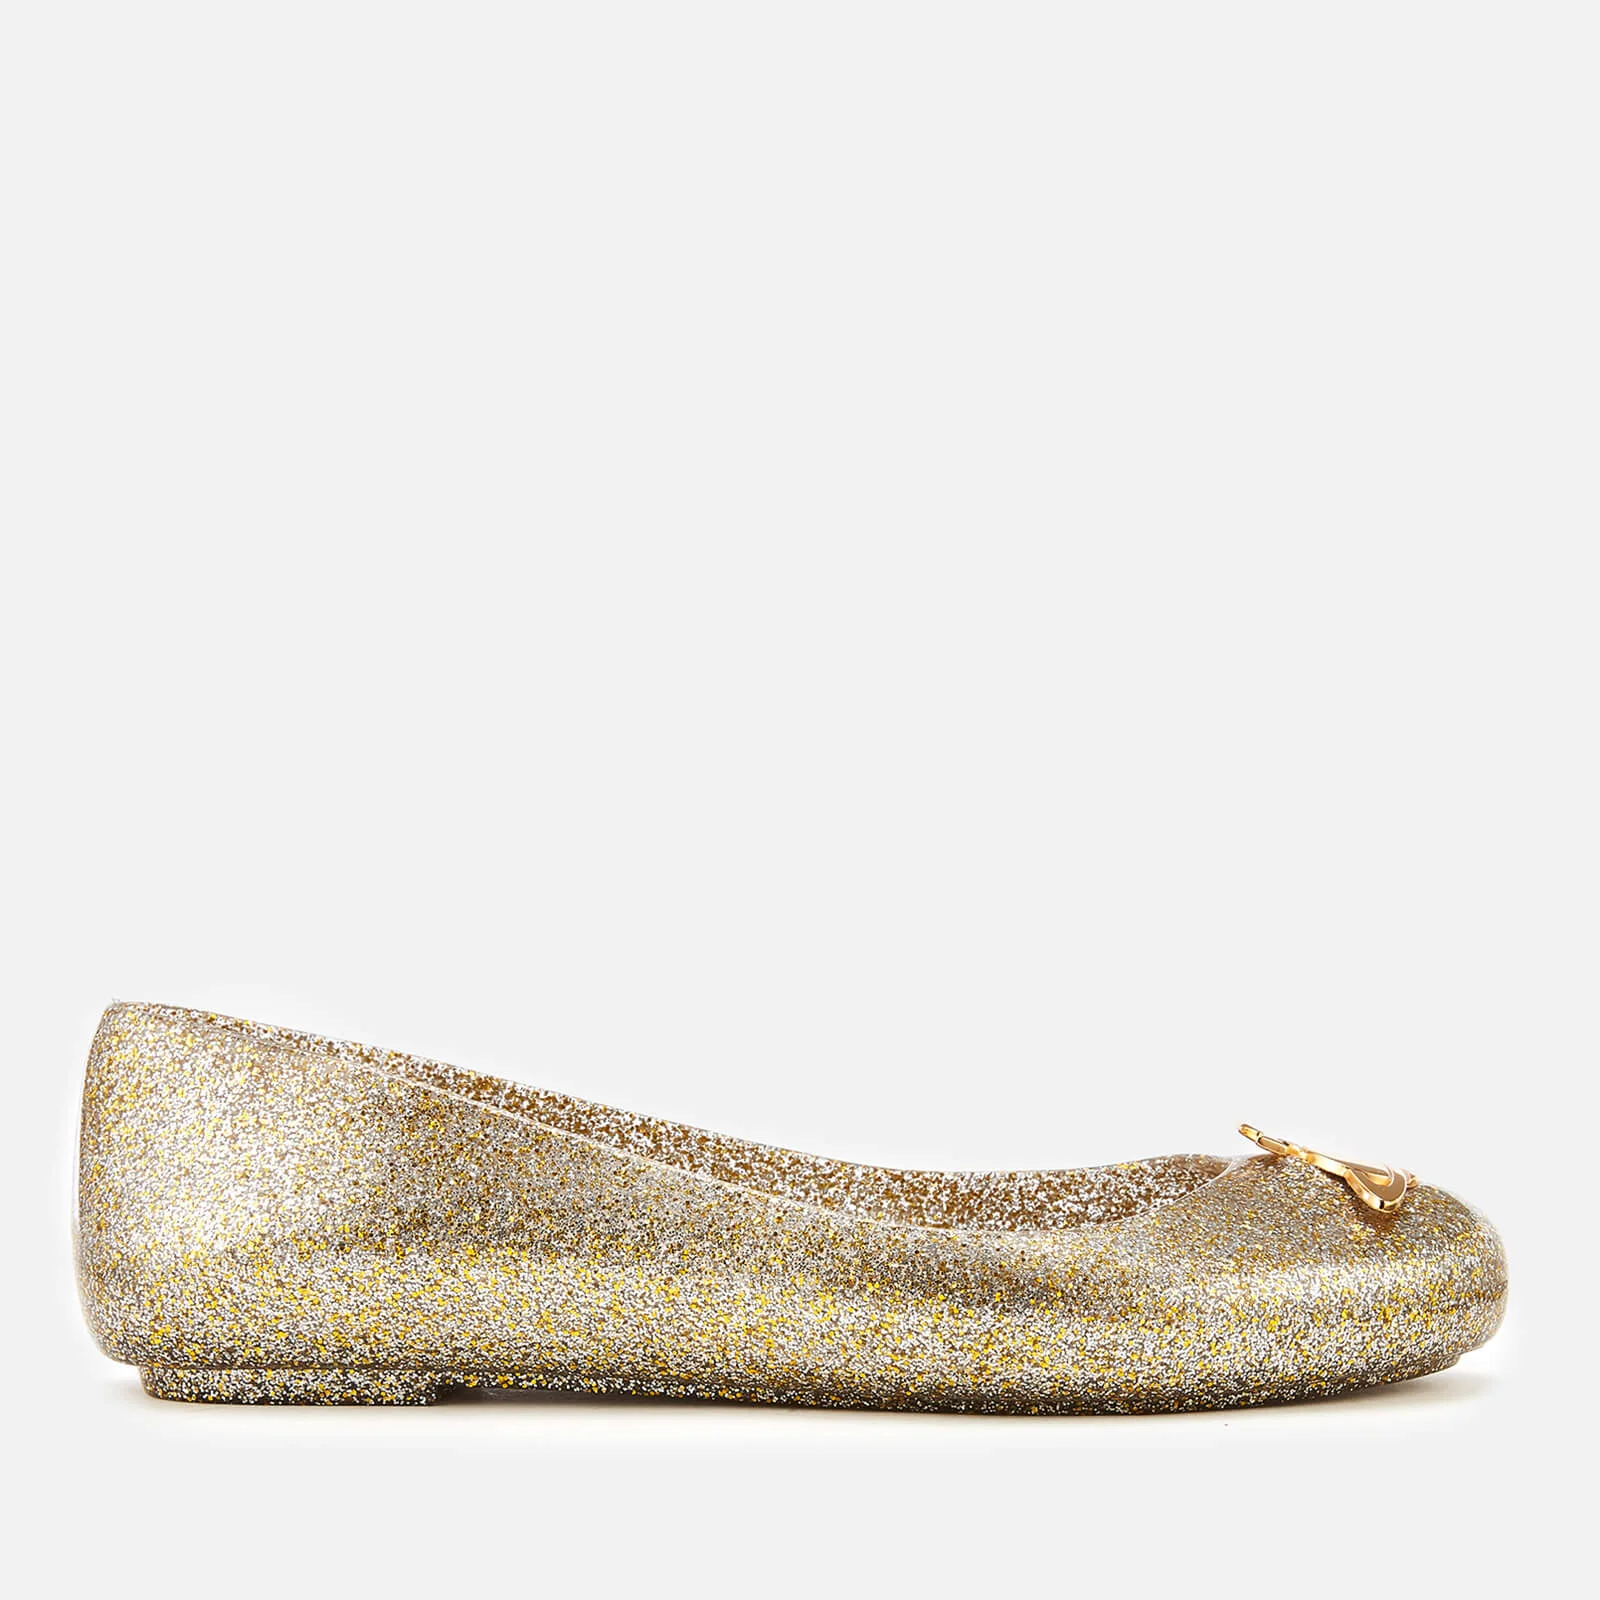 Vivienne Westwood for Melissa Women's Space Love 21 Ballet Flats - Gold Glitter Orb Image 1